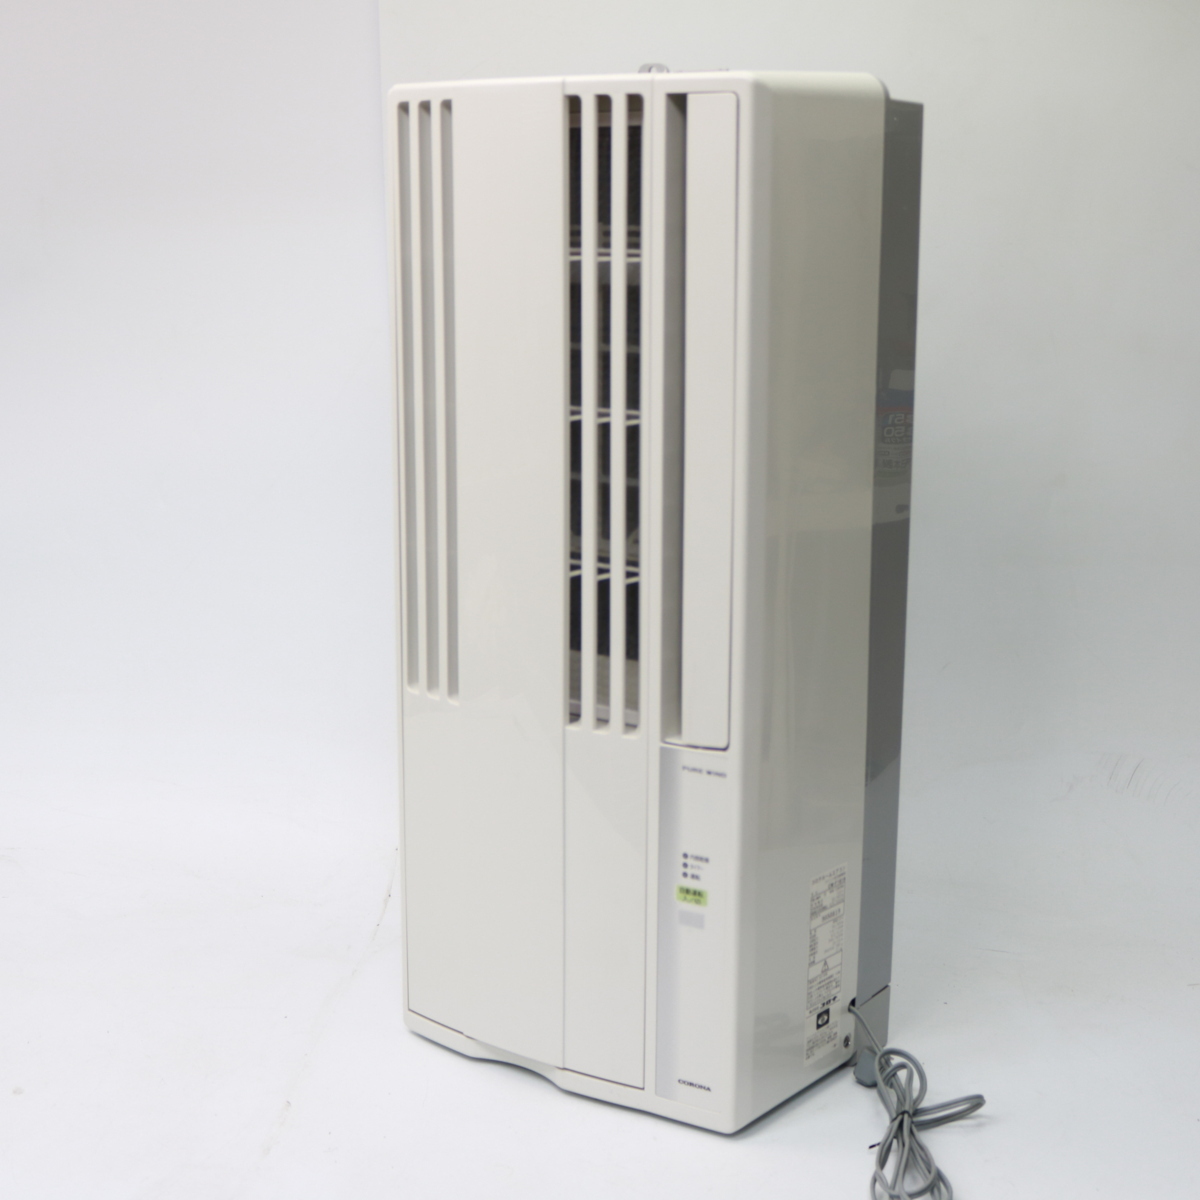 CORONA コロナ CW-F1618 ウインドエアコン 冷房専用 4～6畳用 単相100V 2018年製